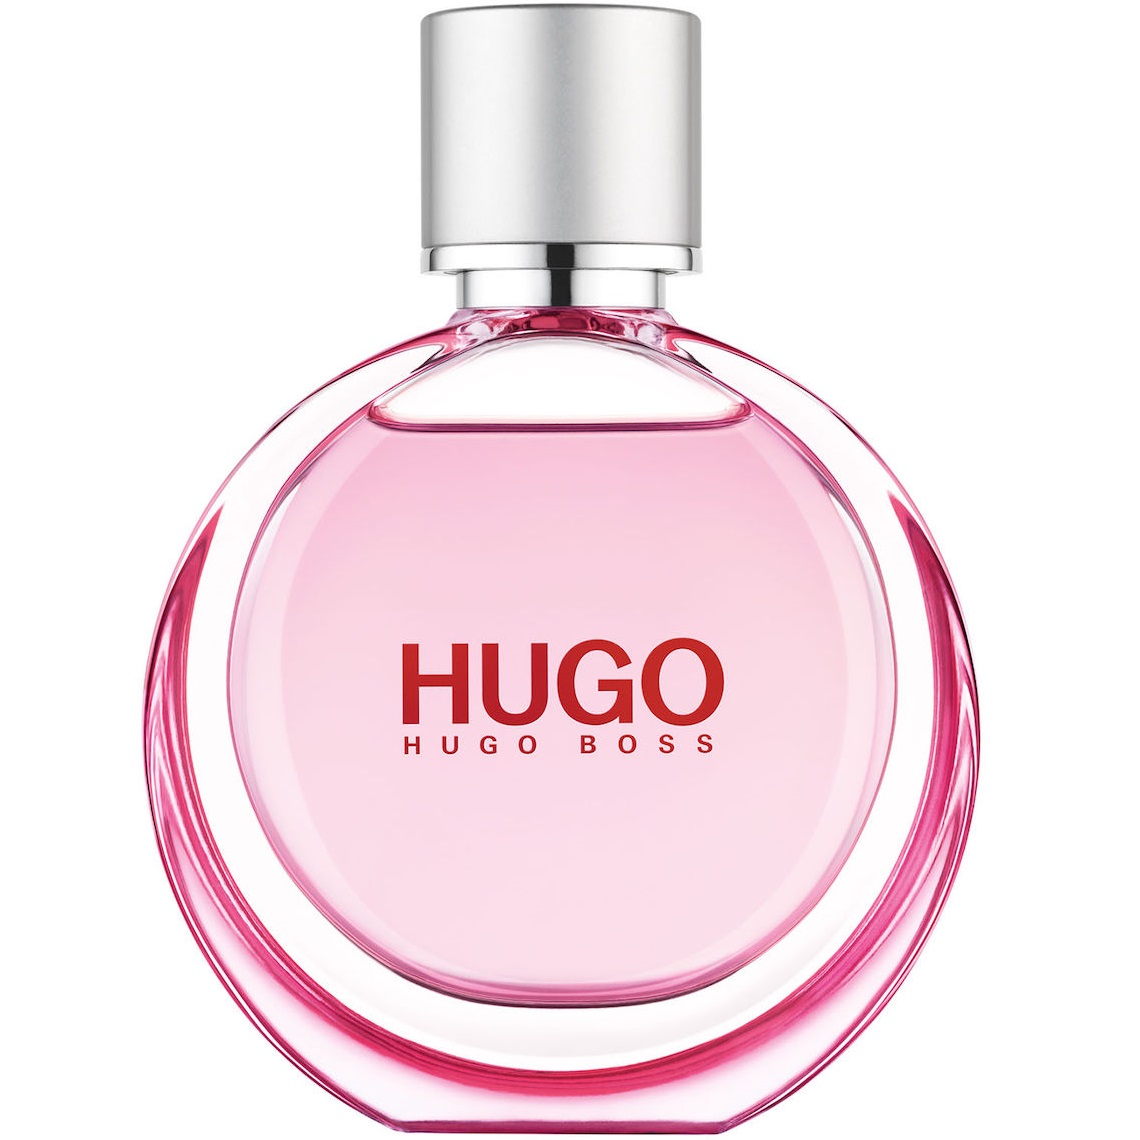 Hugo boss woman парфюмерная. Хуго босс женские духи. Хьюго босс женские духи. Духи босс Хуго босс женские. Парфюмерная вода Hugo Boss Hugo woman, 30 мл.